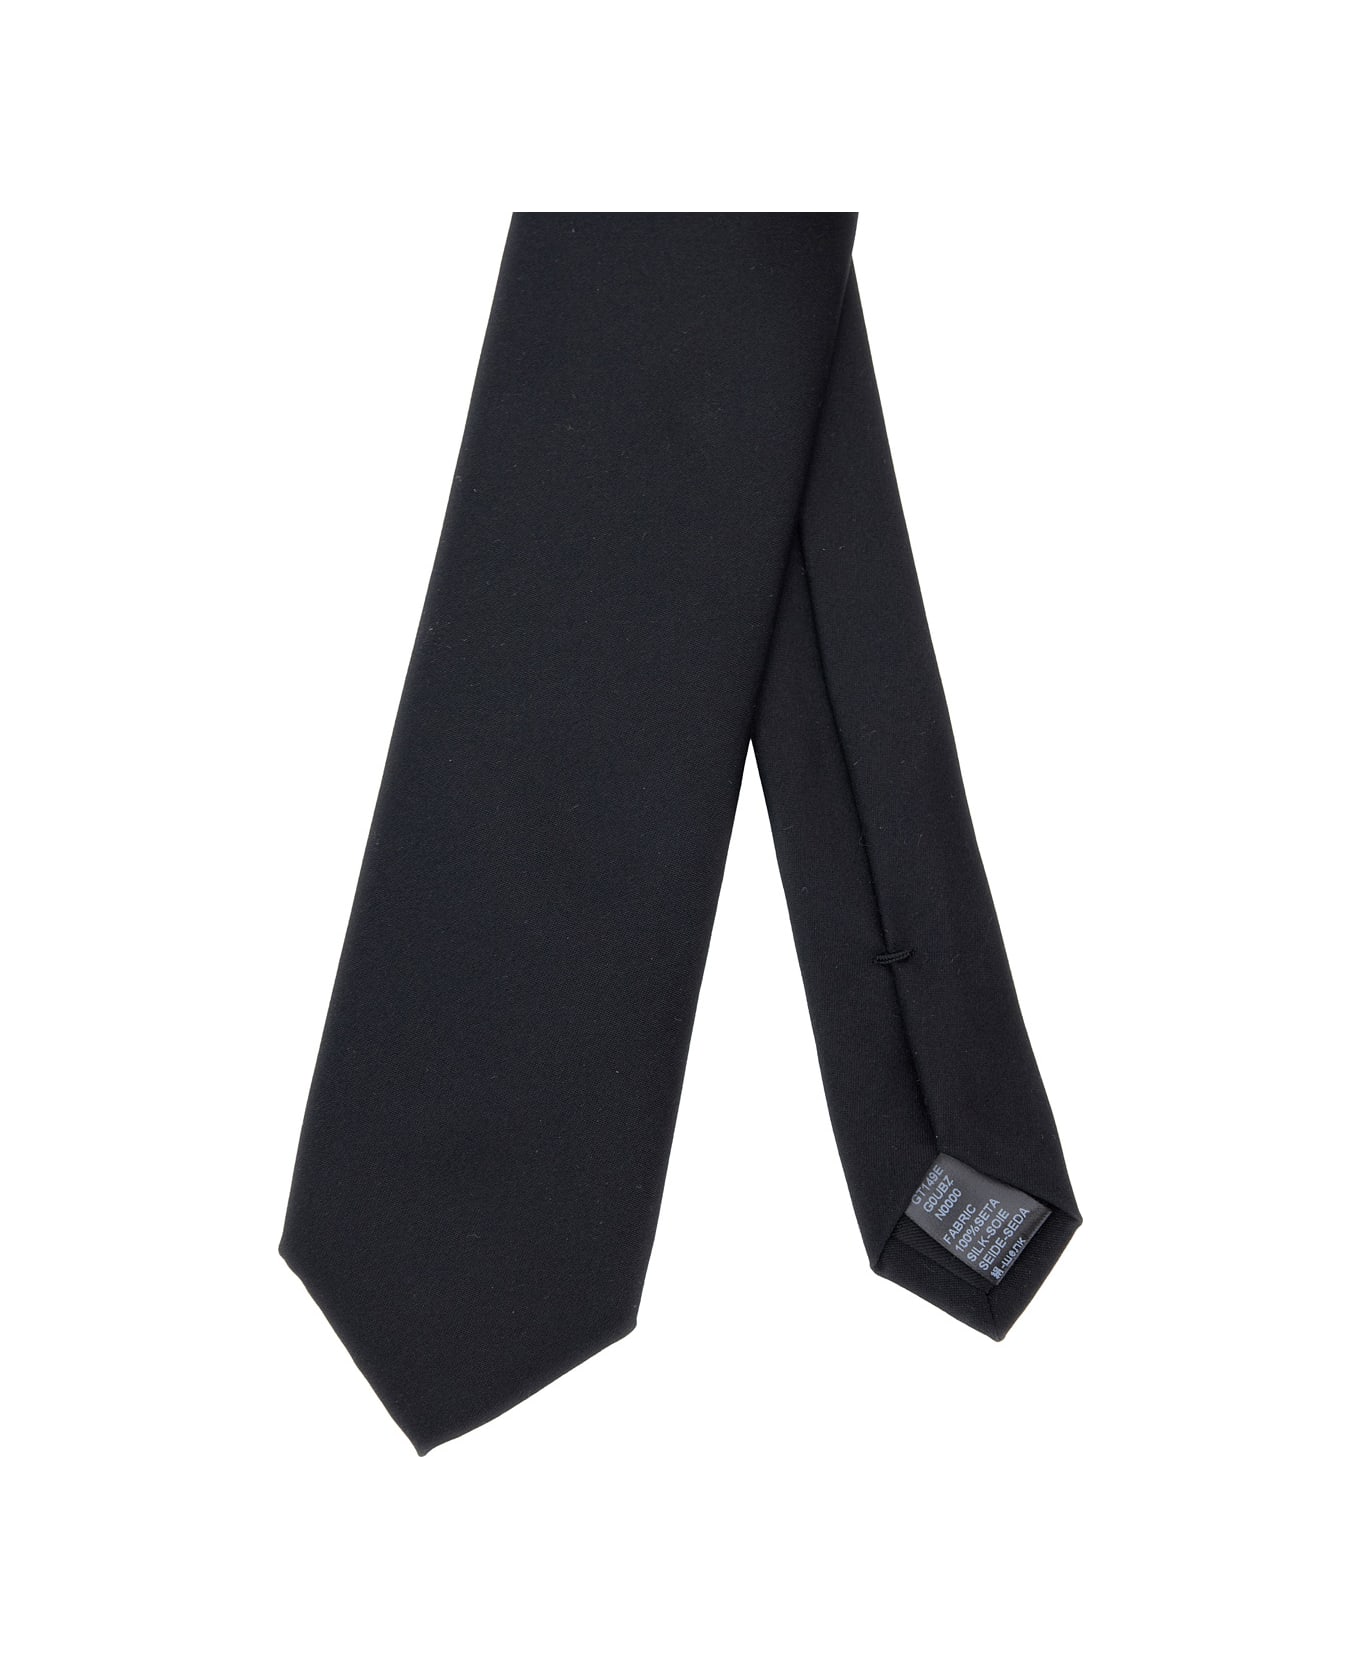 Dolce & Gabbana 'martini' Black Tie With Pointed Tip In Silk Man - Black